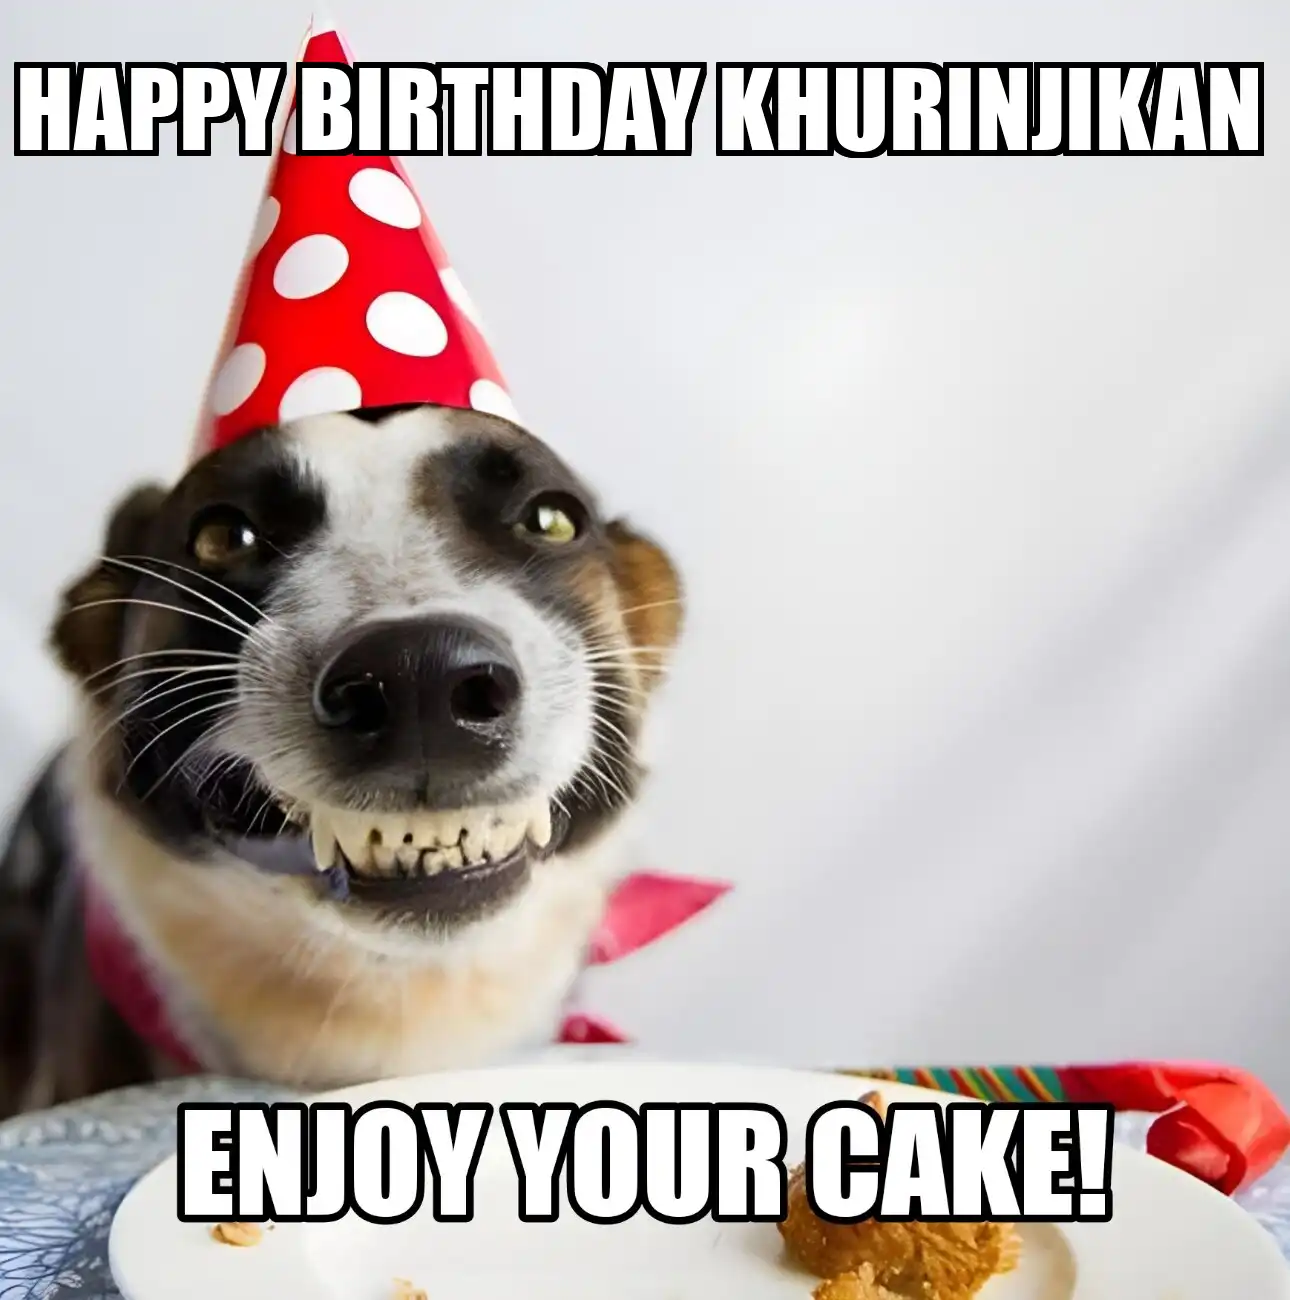 Happy Birthday Khurinjikan Enjoy Your Cake Dog Meme